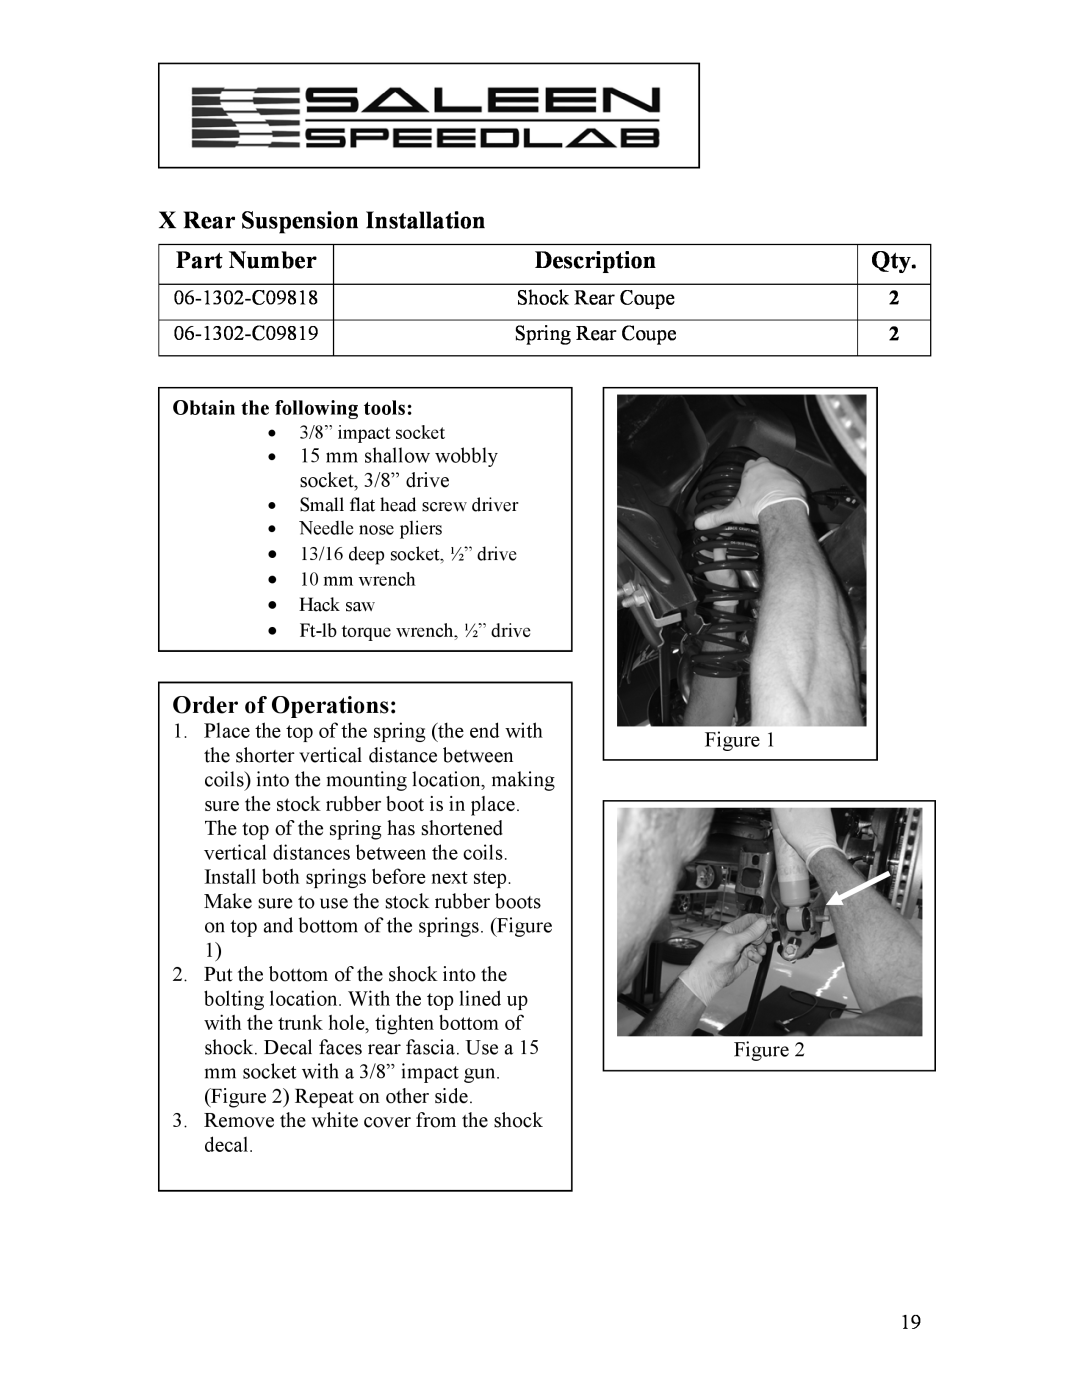 Saleen 10-8002-C11790A installation manual X Rear Suspension Installation, Part Number, Description, Order of Operations 